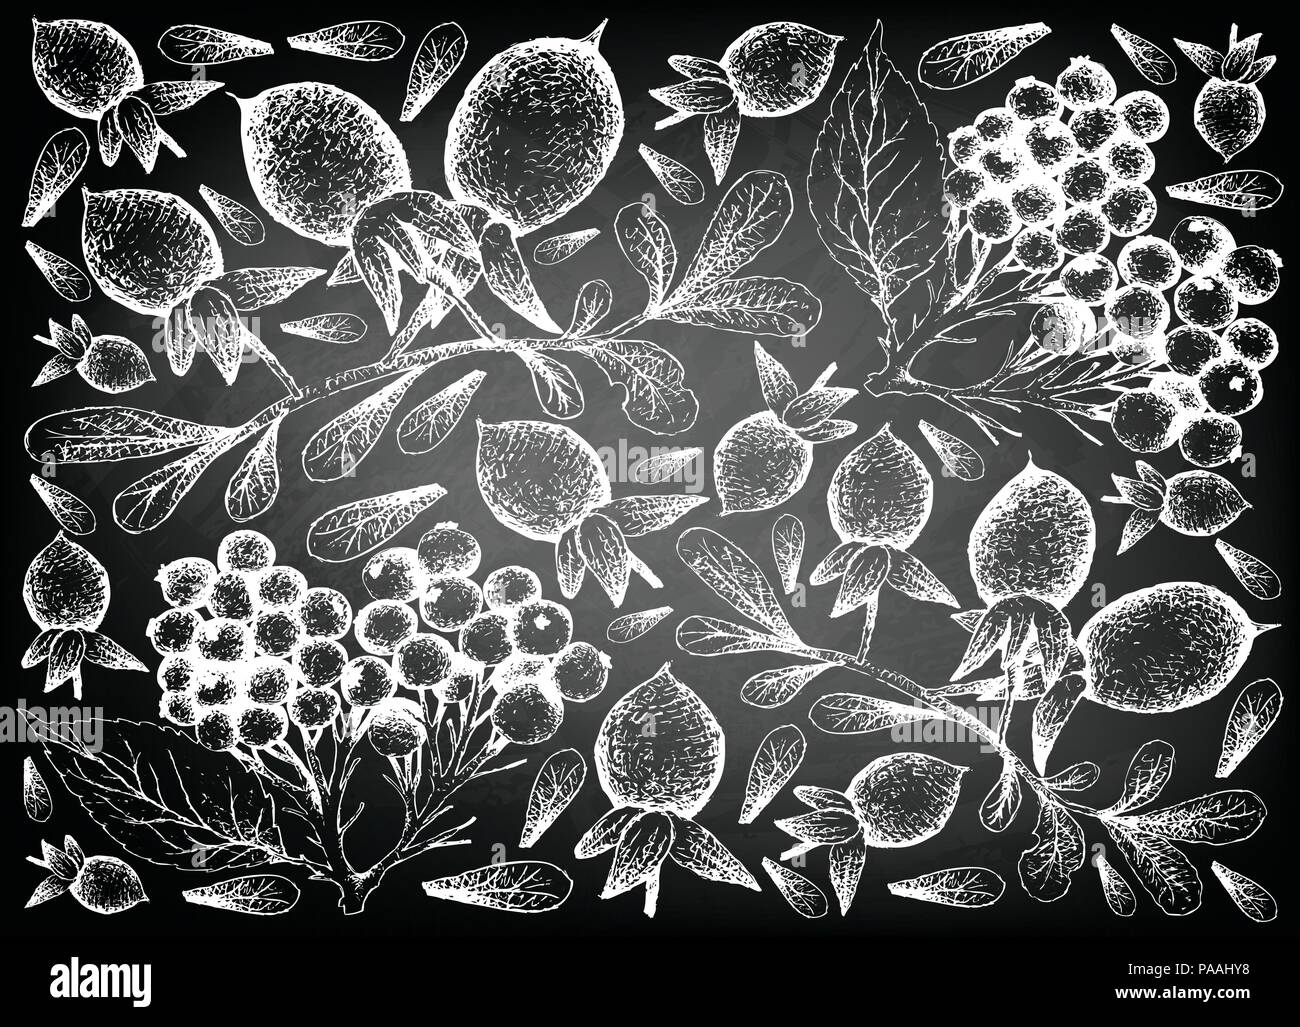 Berry Fruit, Illustration Wallpaper Background of Hand Drawn Sketch of Elderberry or Sambucus Nigra and Elderberry or Sambucus Nigra Fruits on Black C Stock Vector